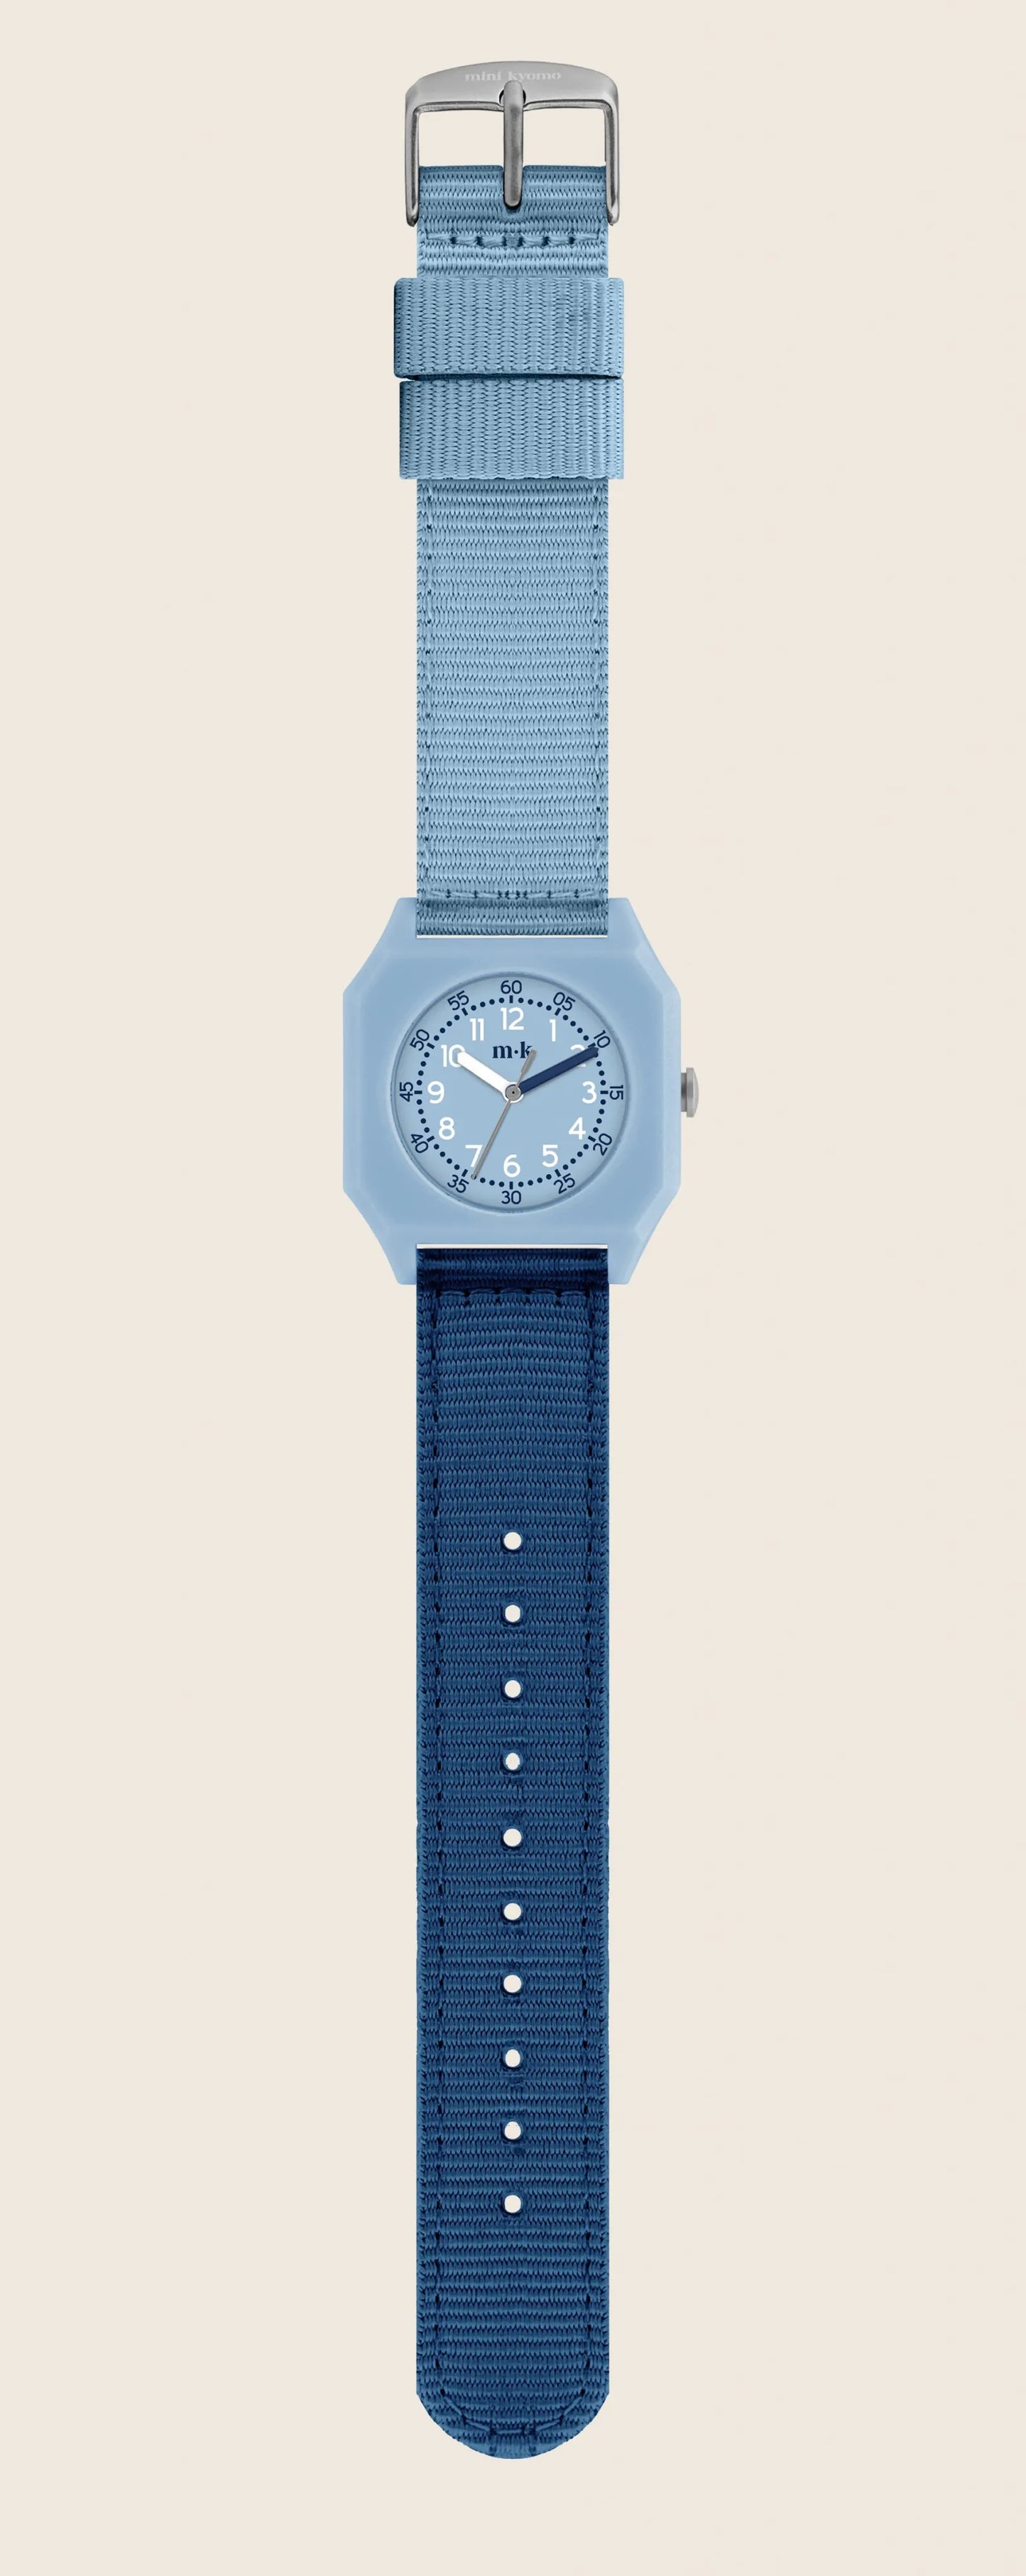 Blue Cotton Candy watch